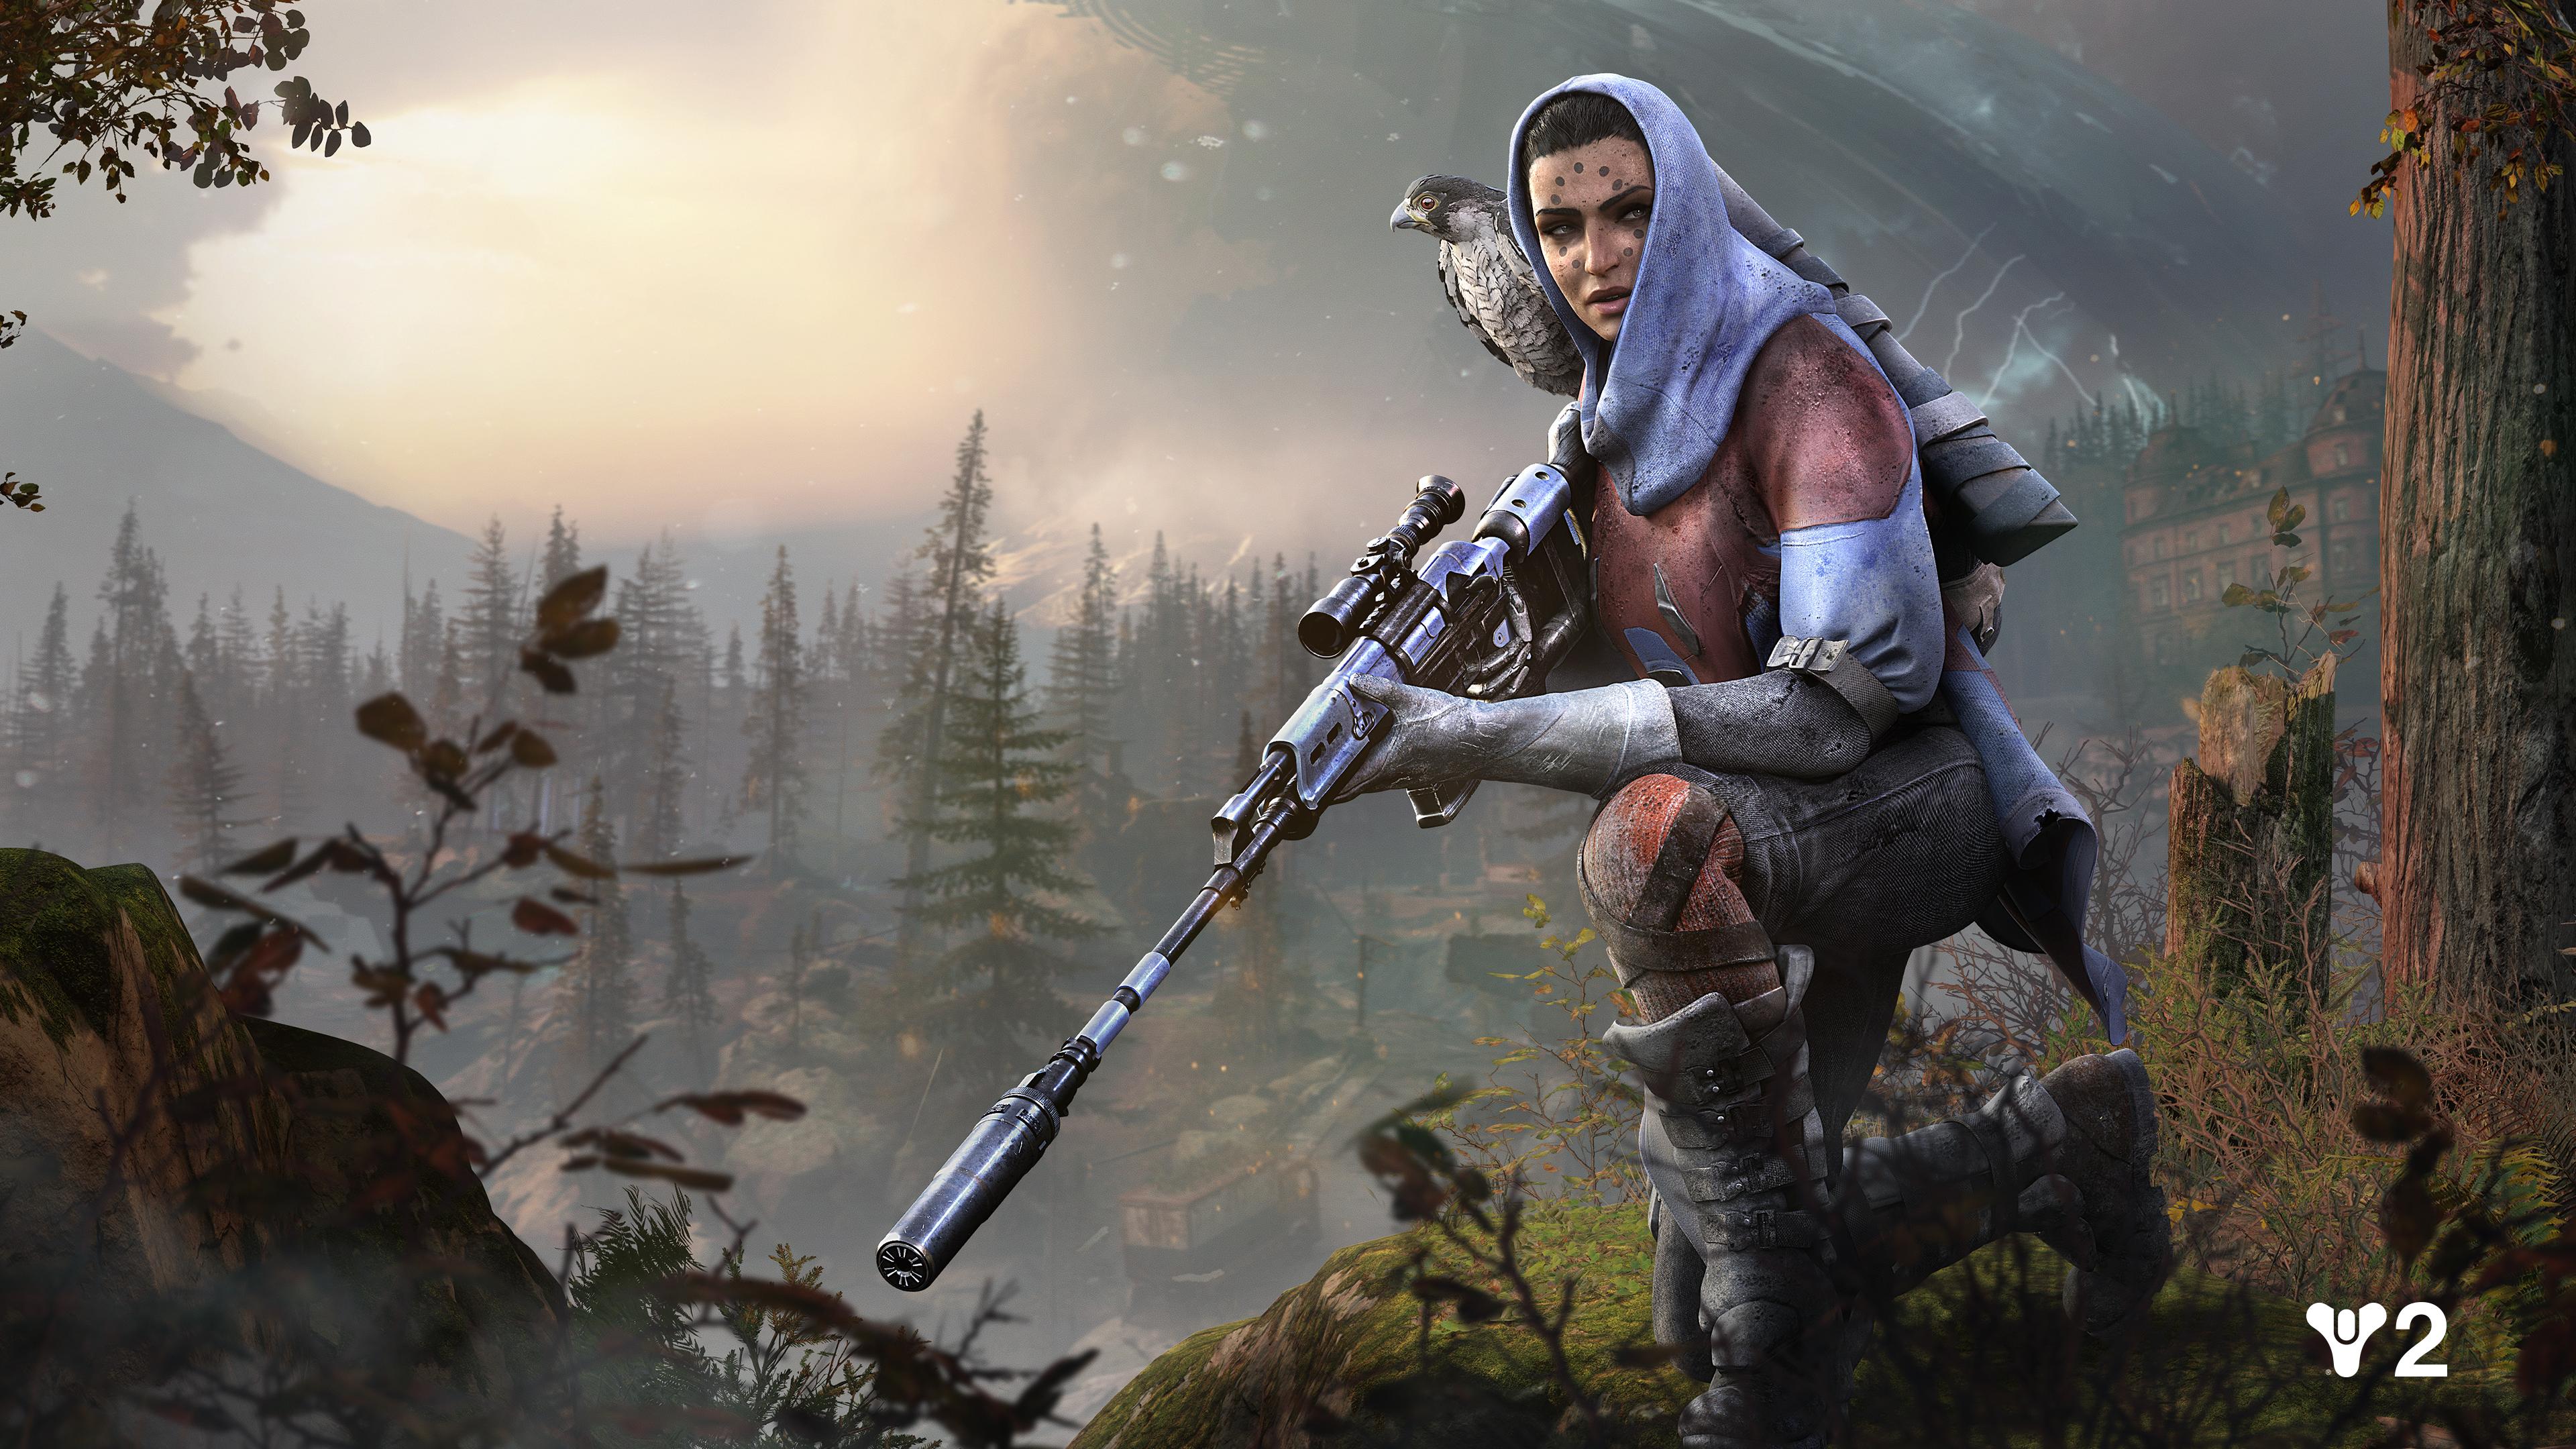 Destiny 2, Video games, Hawthorne, Sniper rifle, Hoods, Forest Wallpaper